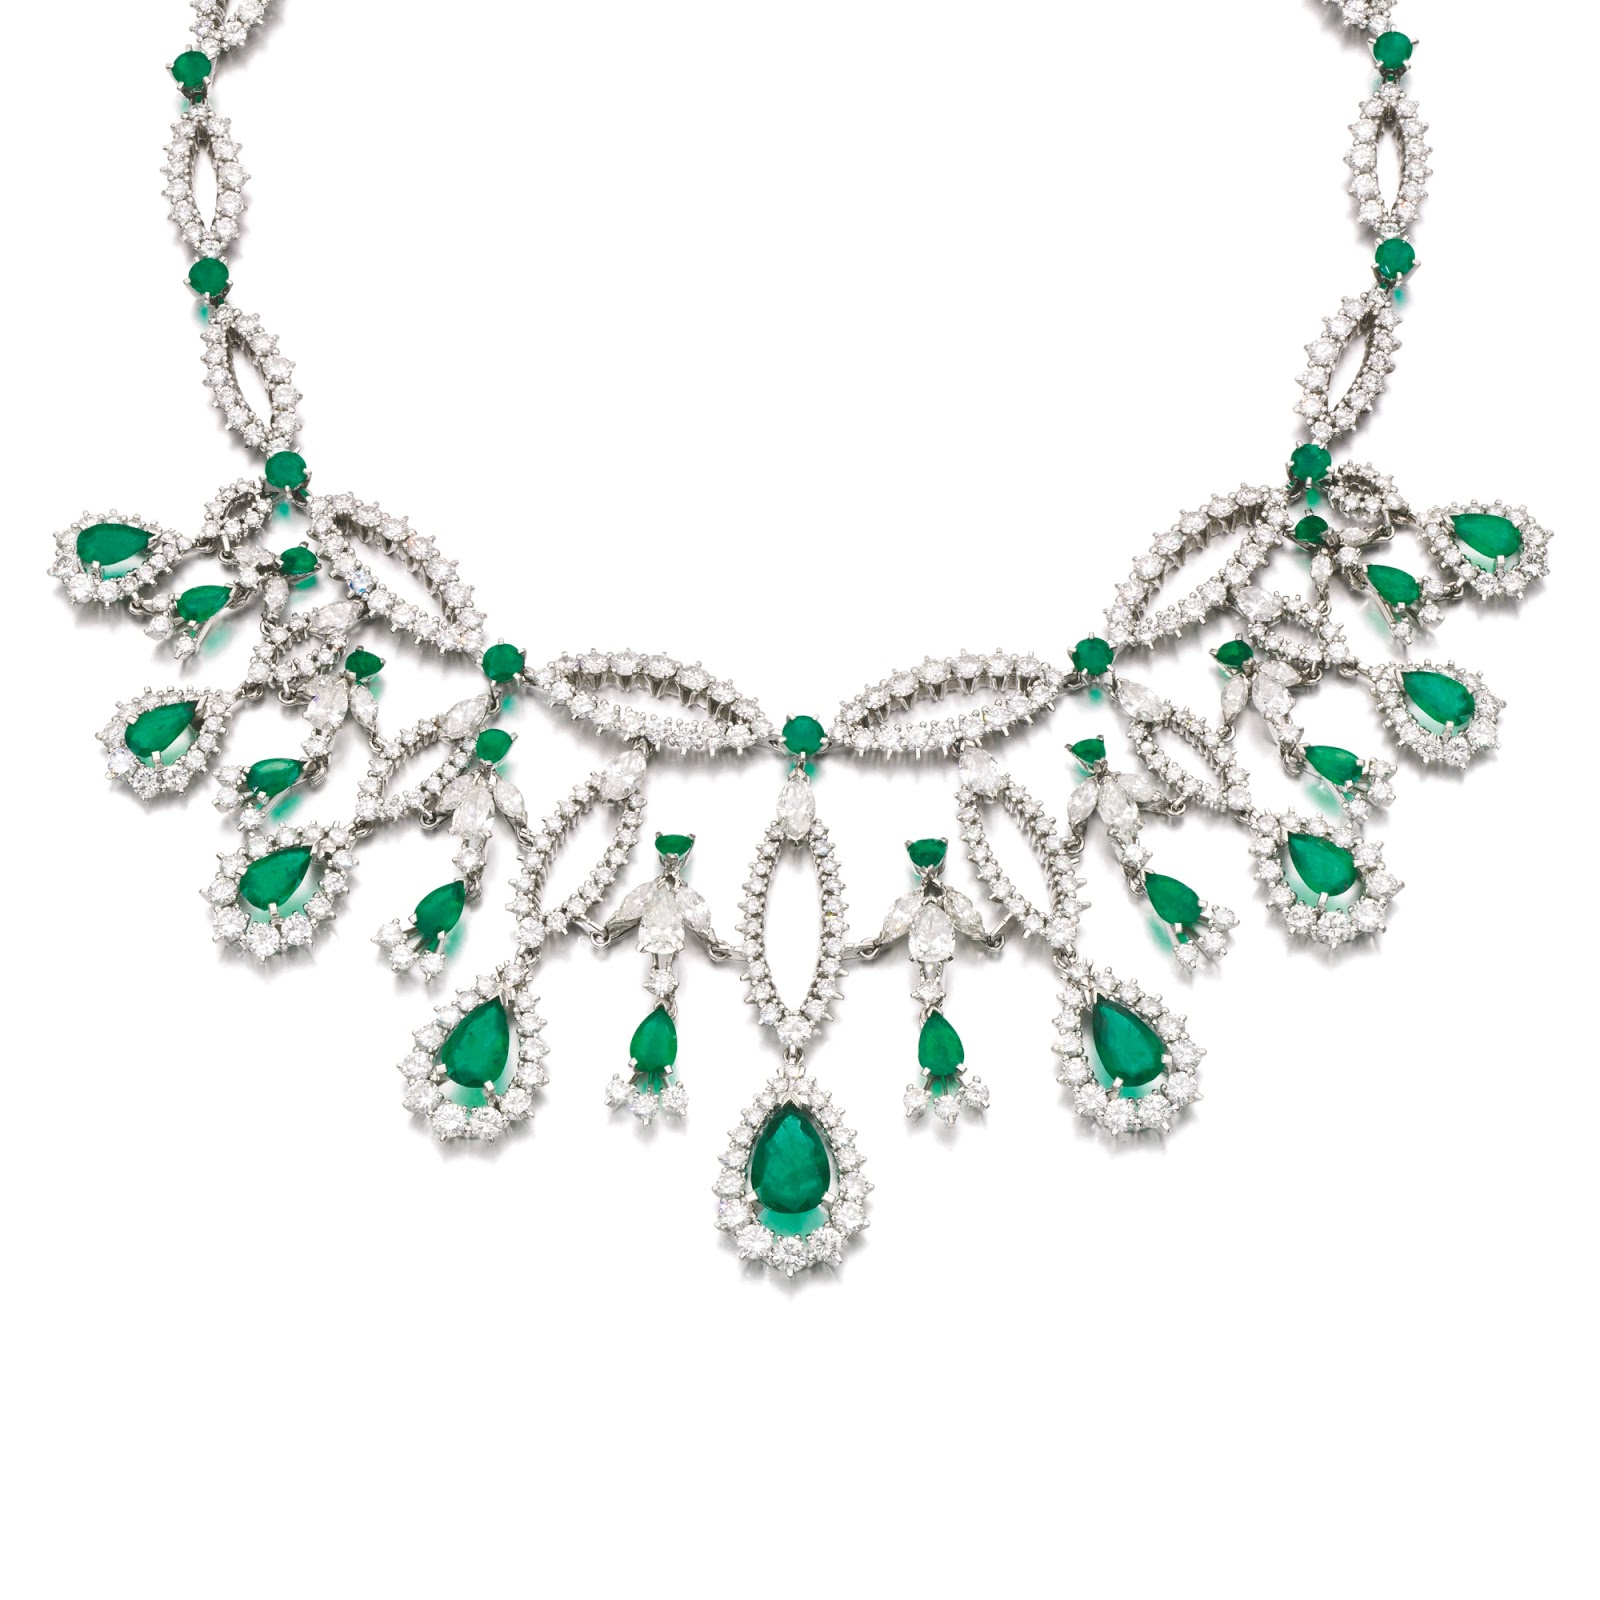 Marie Poutine's Jewels & Royals: Elegant Green Necklaces I